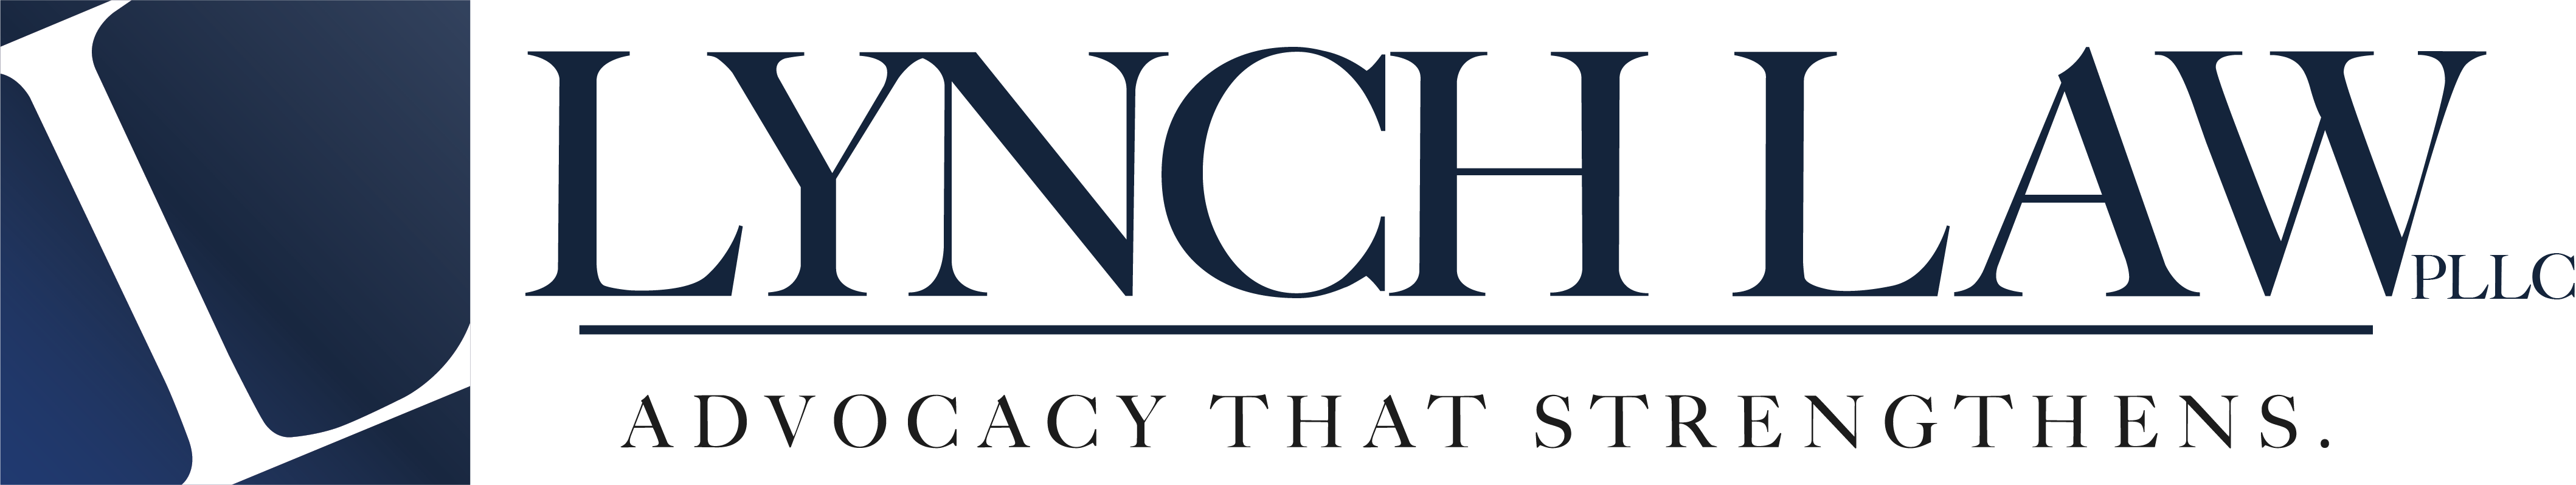 Chance D. Lynch, Esq. Logo